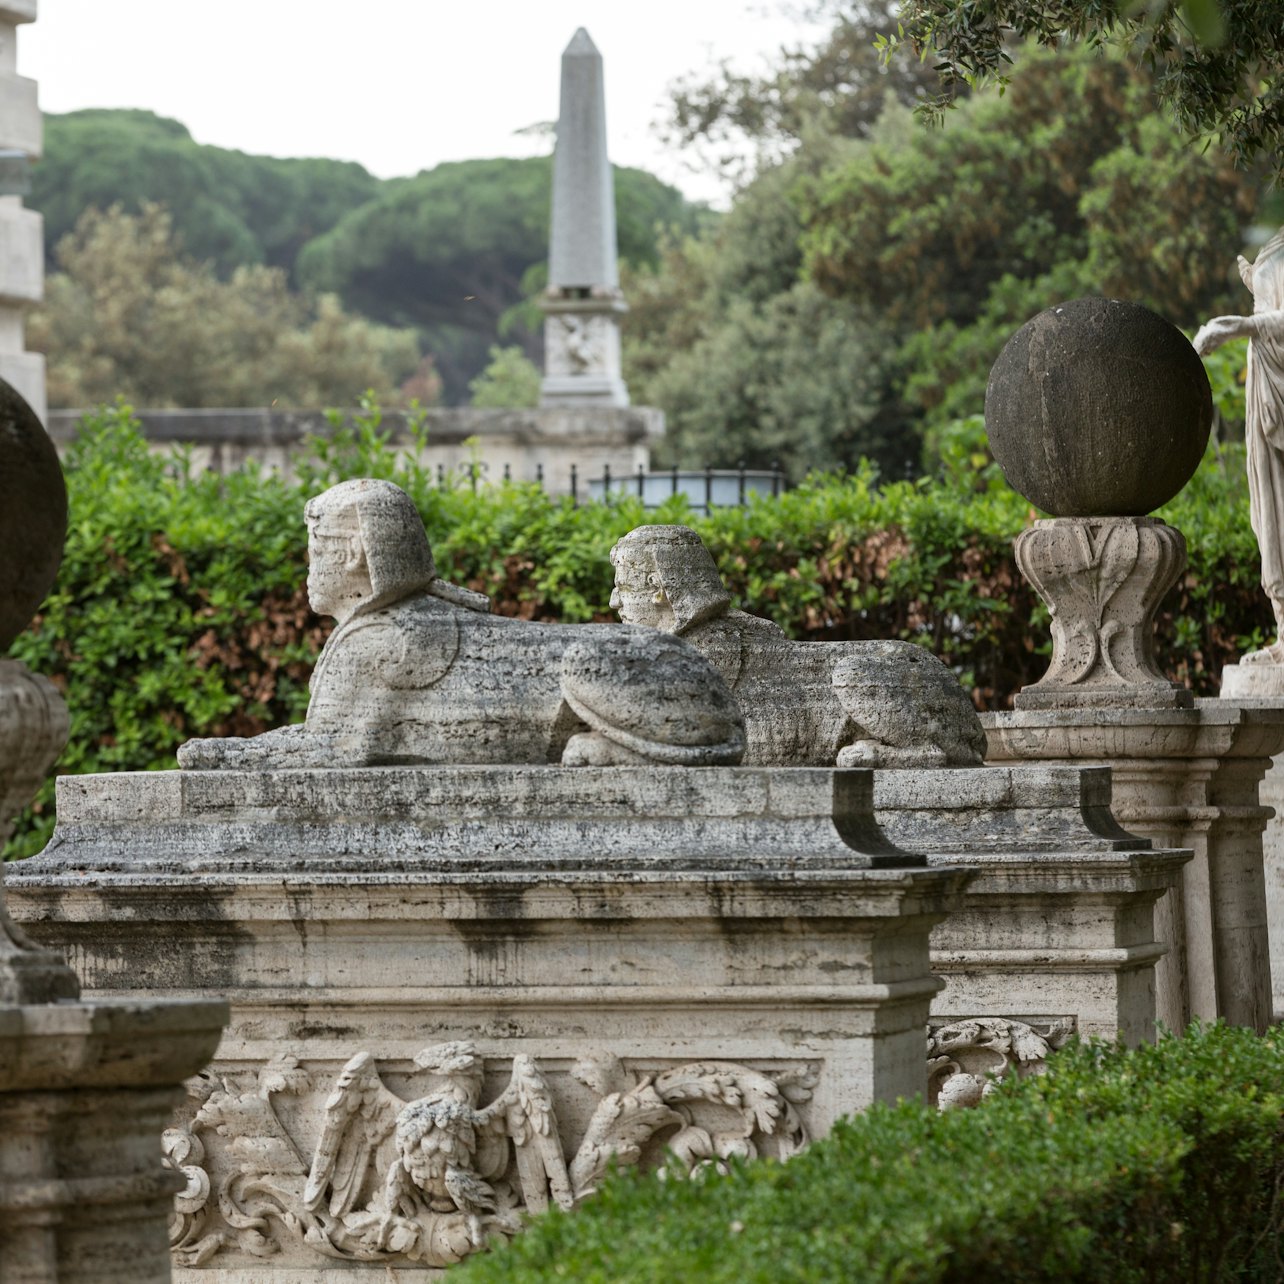 Galería Borghese: Entrada reservada - Alojamientos en Roma